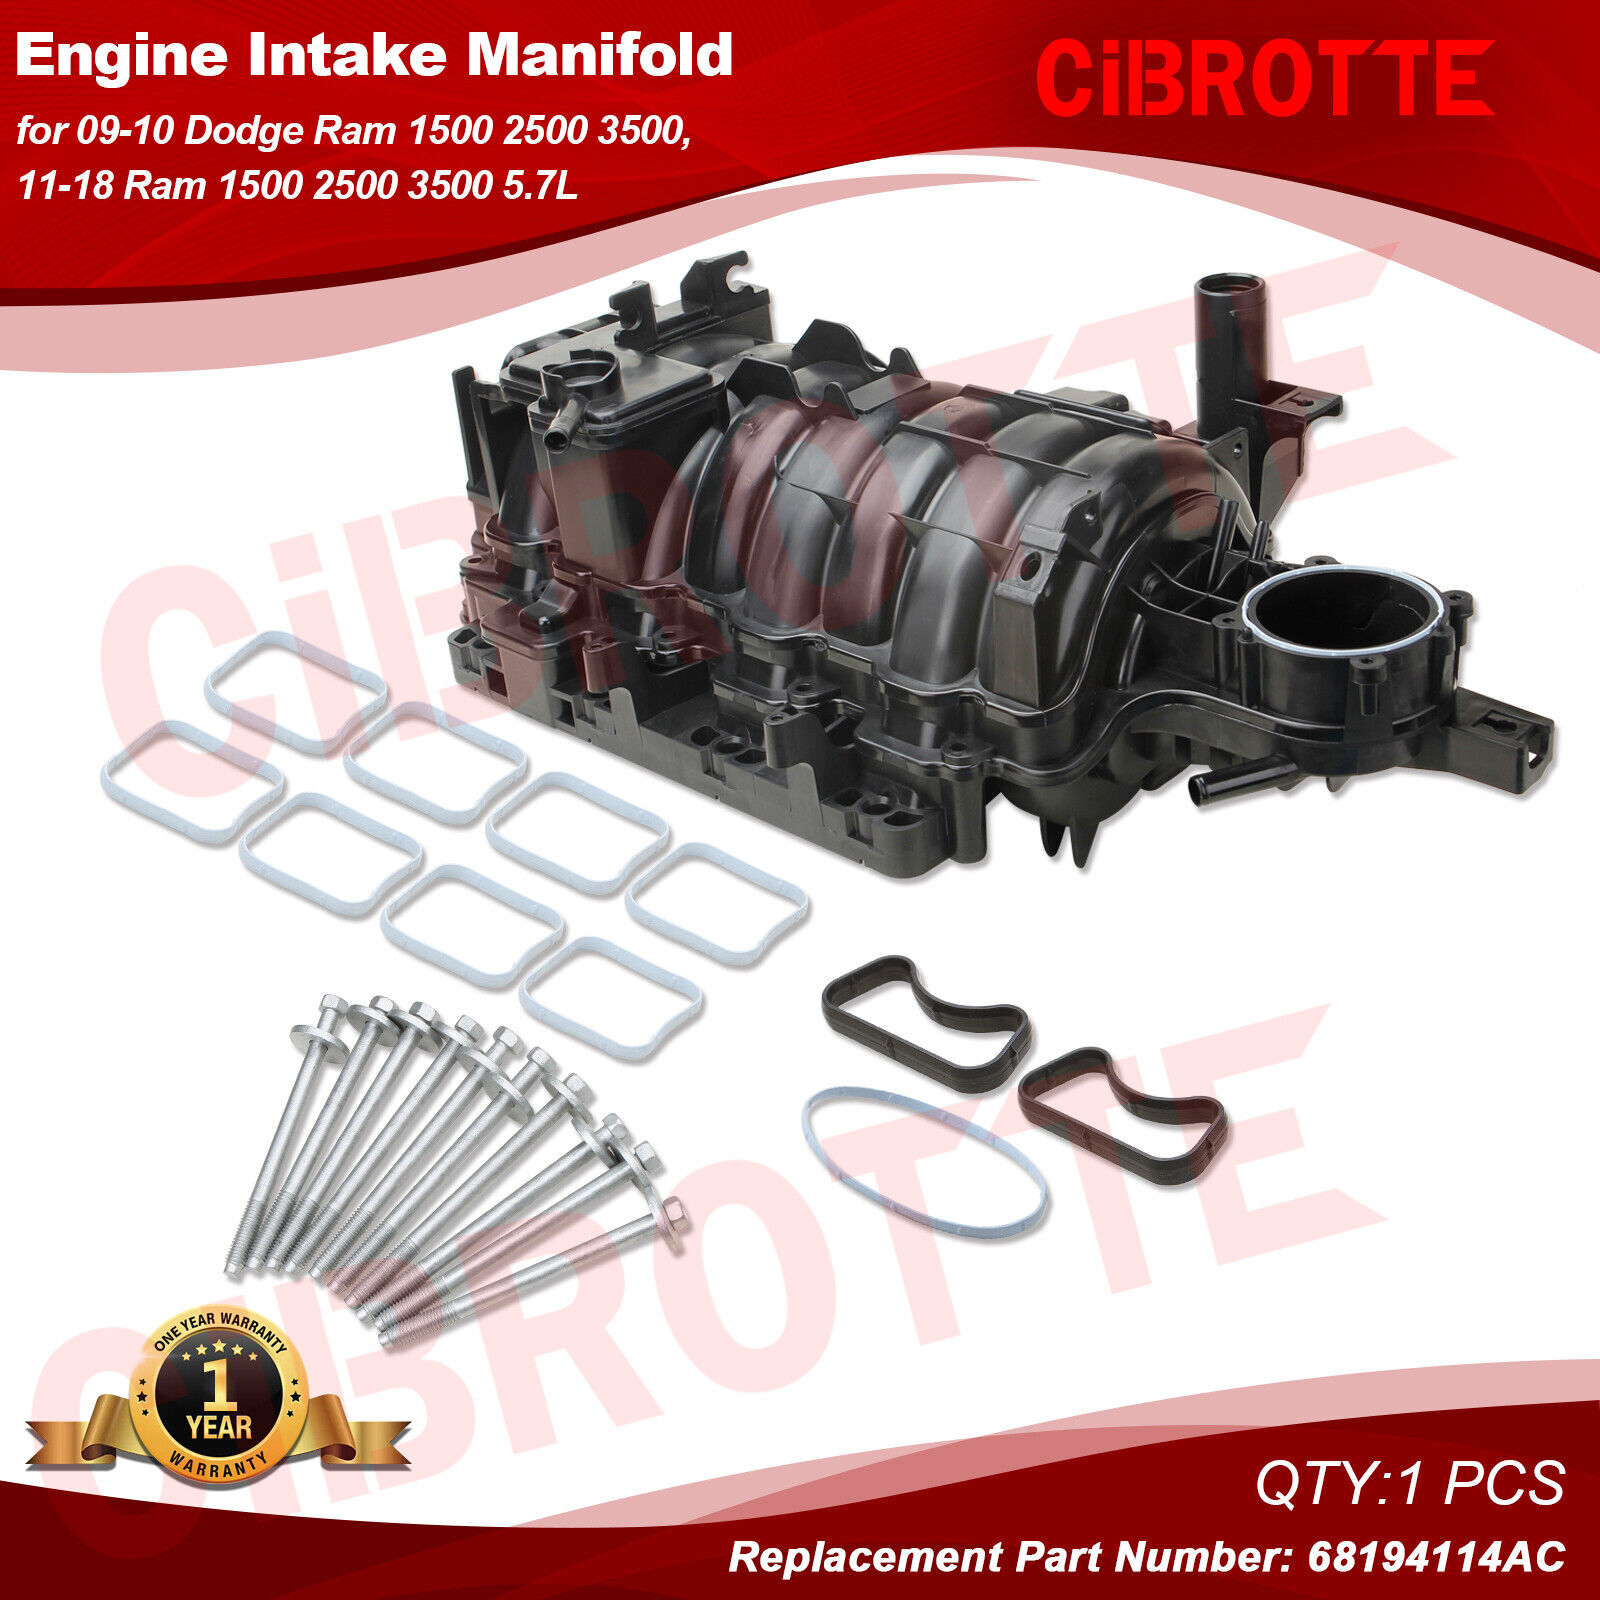 ⭐68194114AC Engine Intake Manifold for 09-10 Dodge Ram 1500 11-21 Ram 1500 5.7L⭐